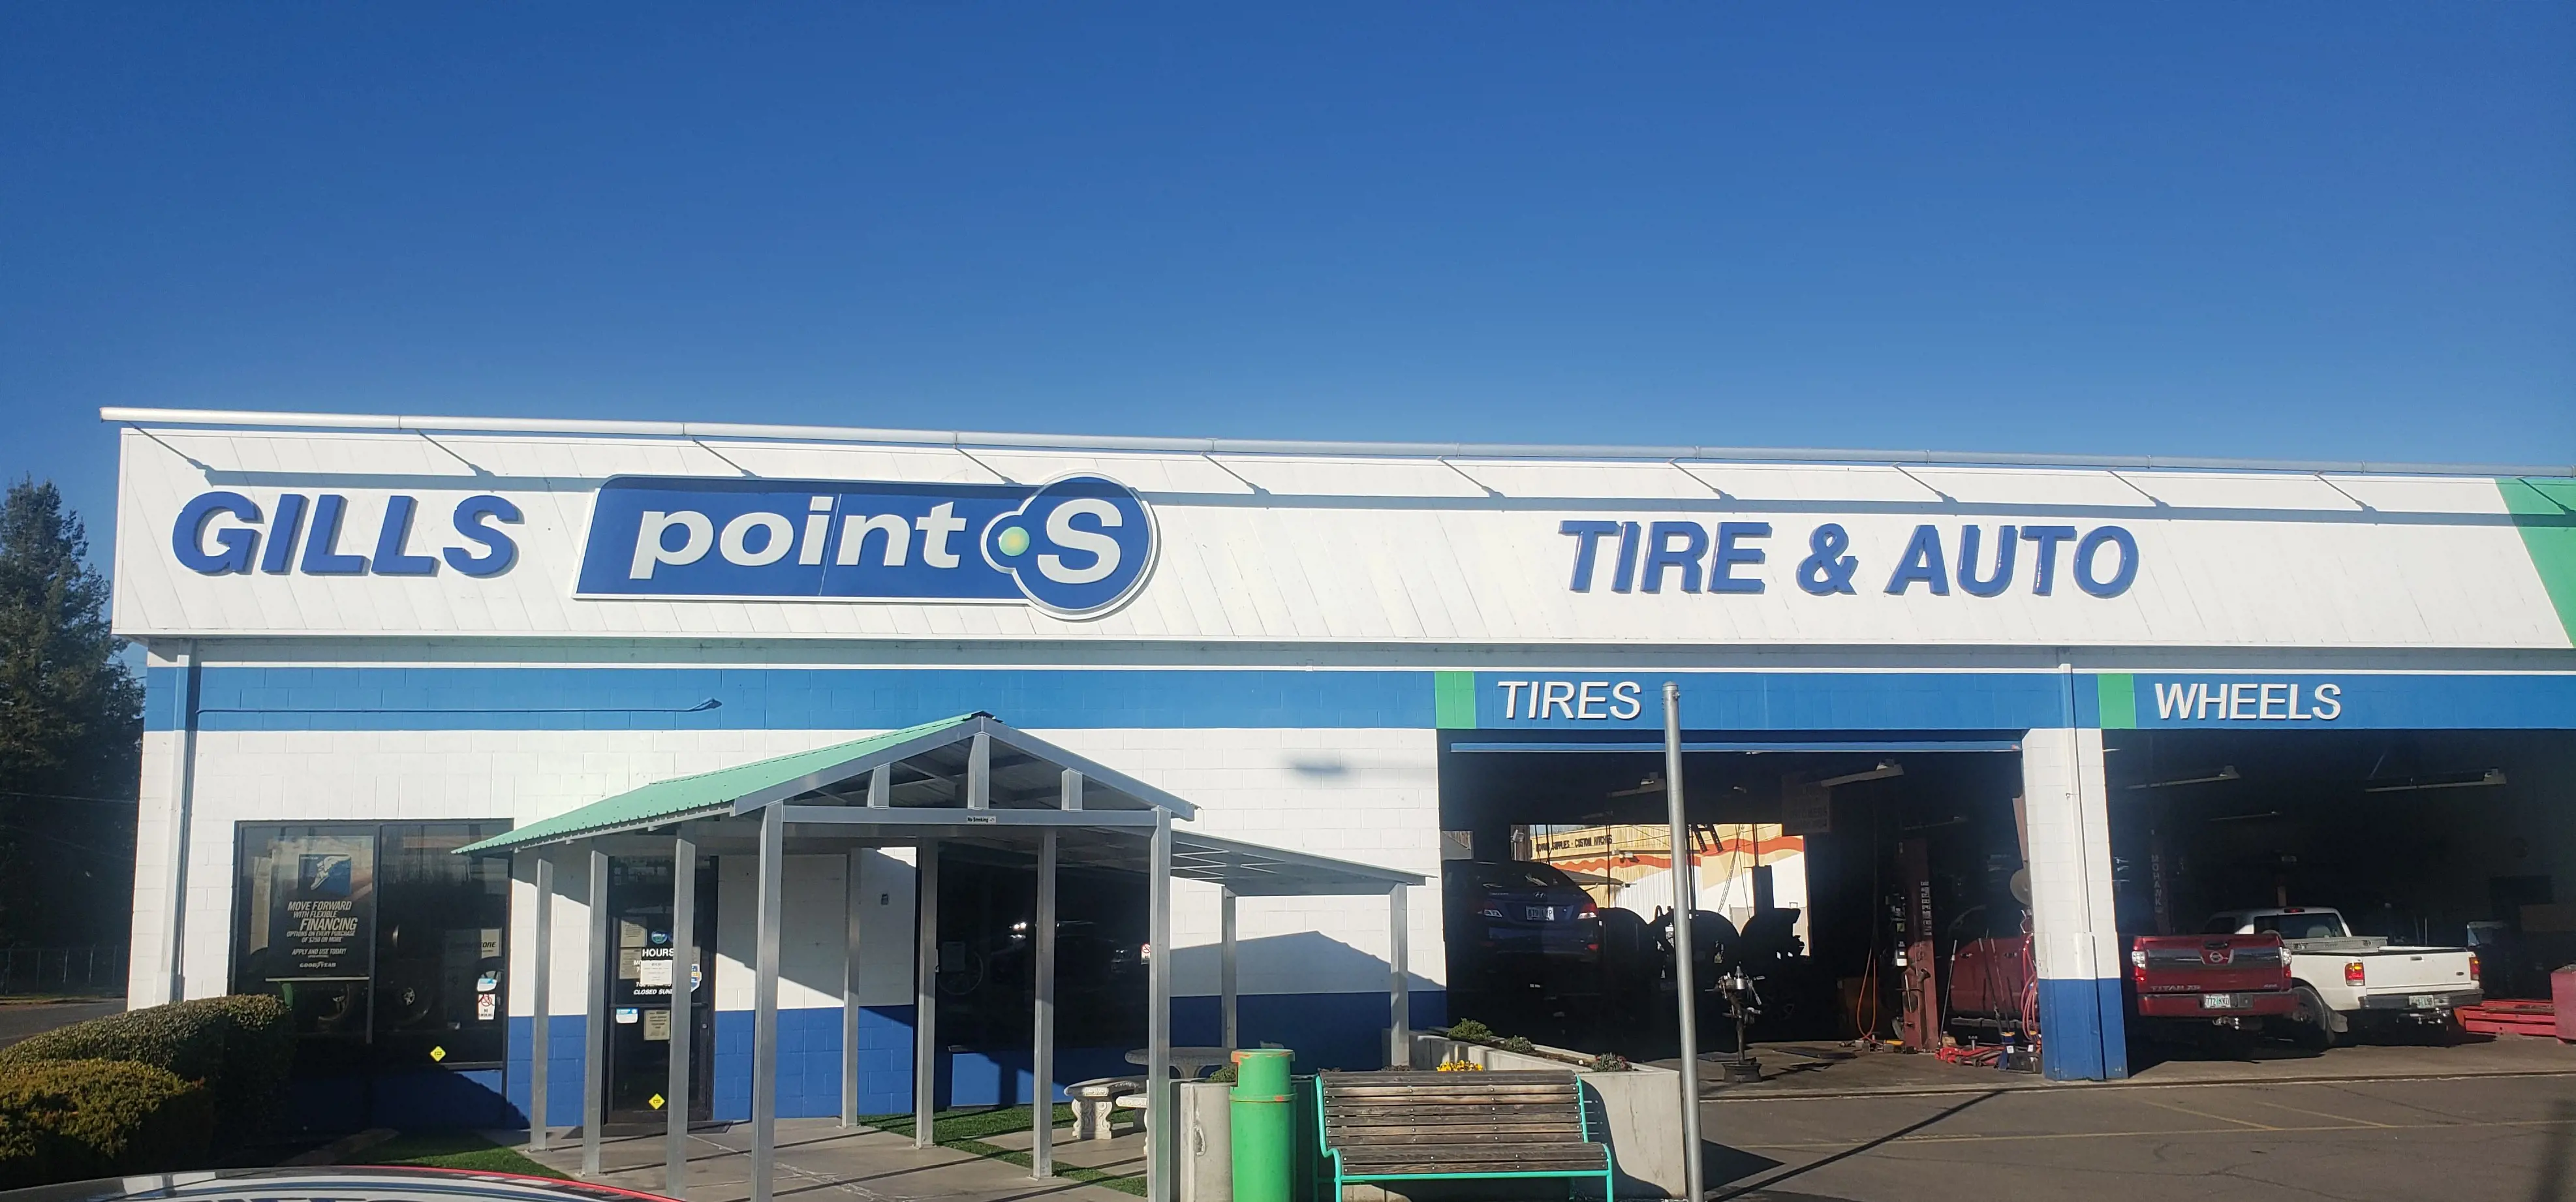 Gills Point S Tire & Auto - Medford